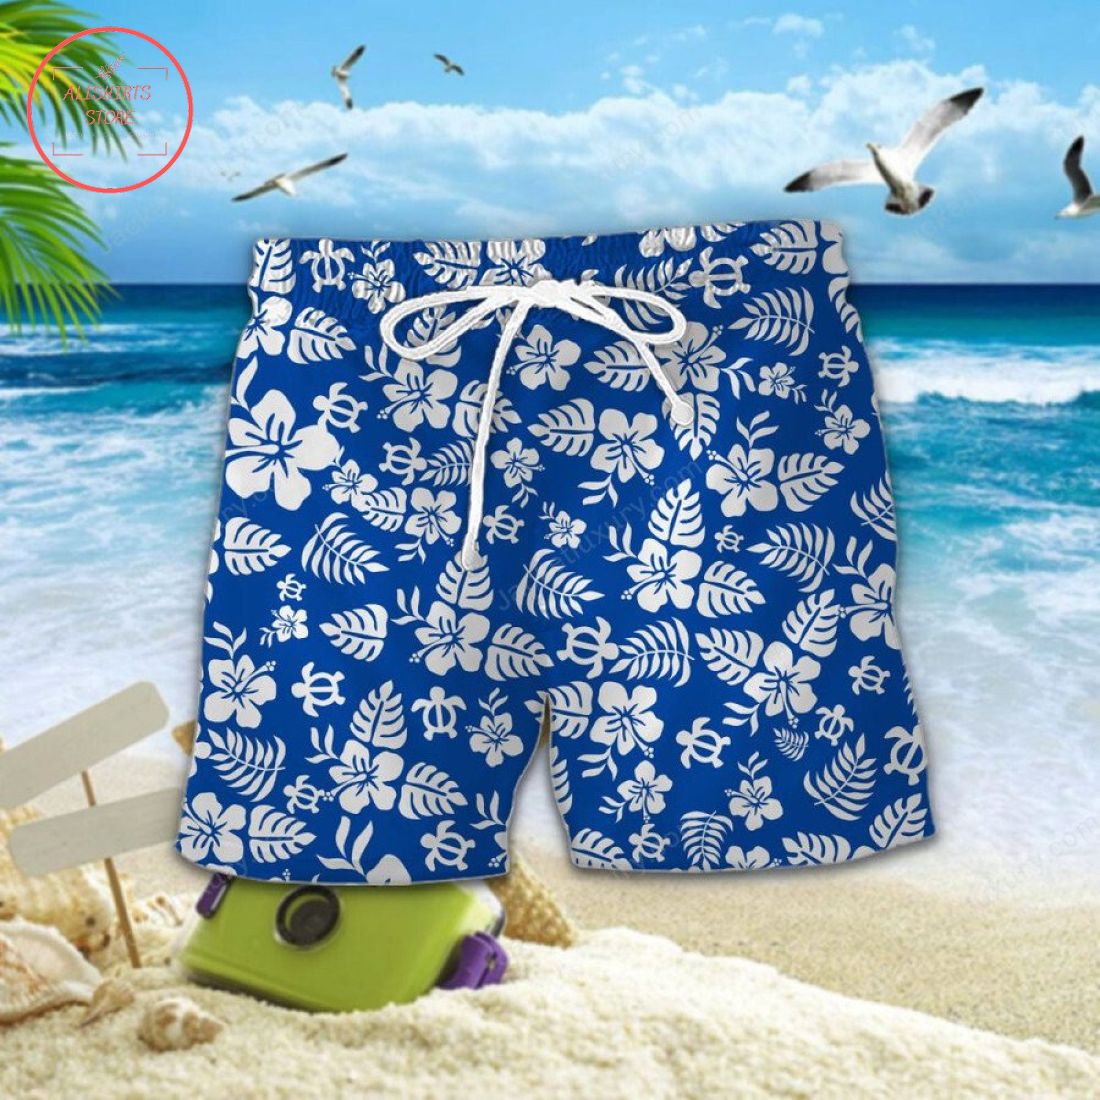 Wigan Athletic Aloha Hawaiian Shirt and Beach Shorts